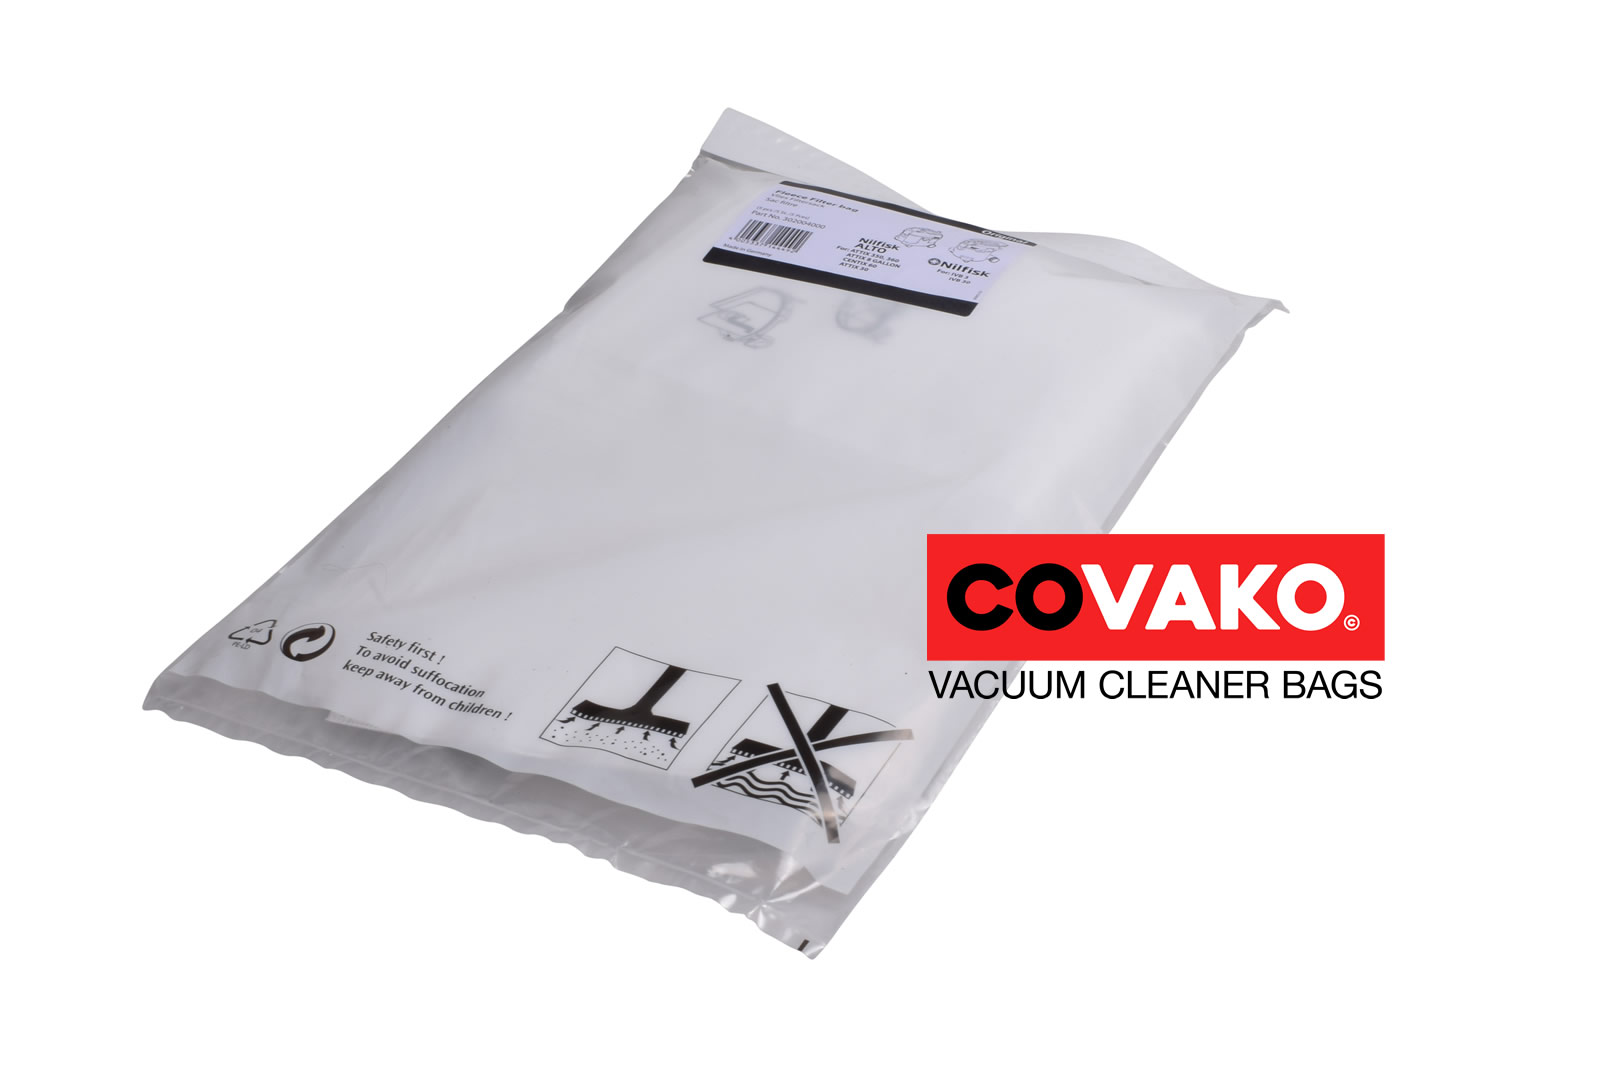 Wap Attix 360-11 / Synthesis - Wap vacuum cleaner bags